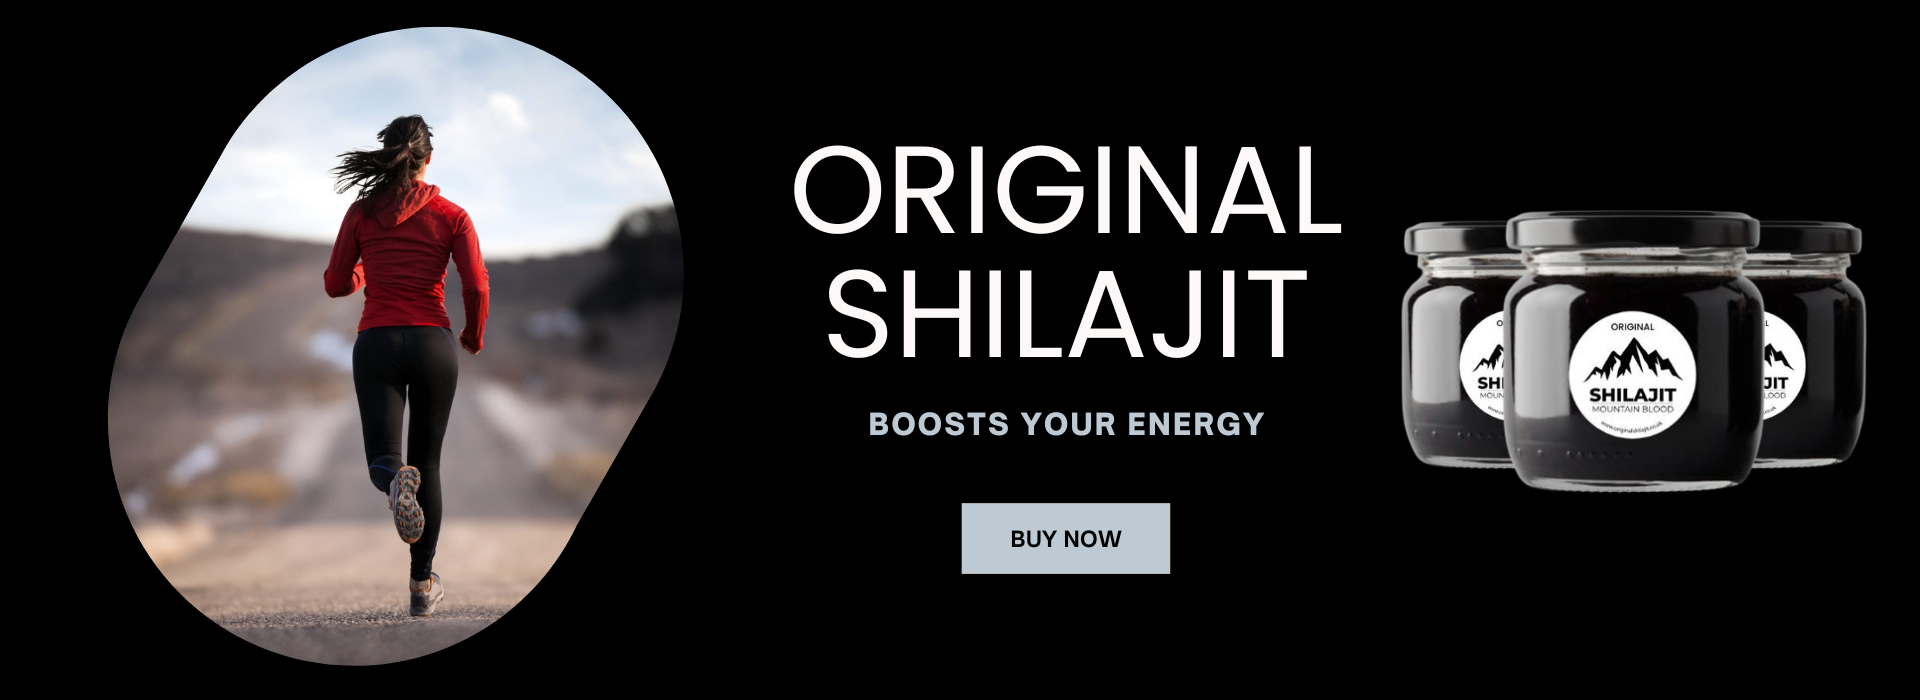 Original Shilajit Boosts your Energy